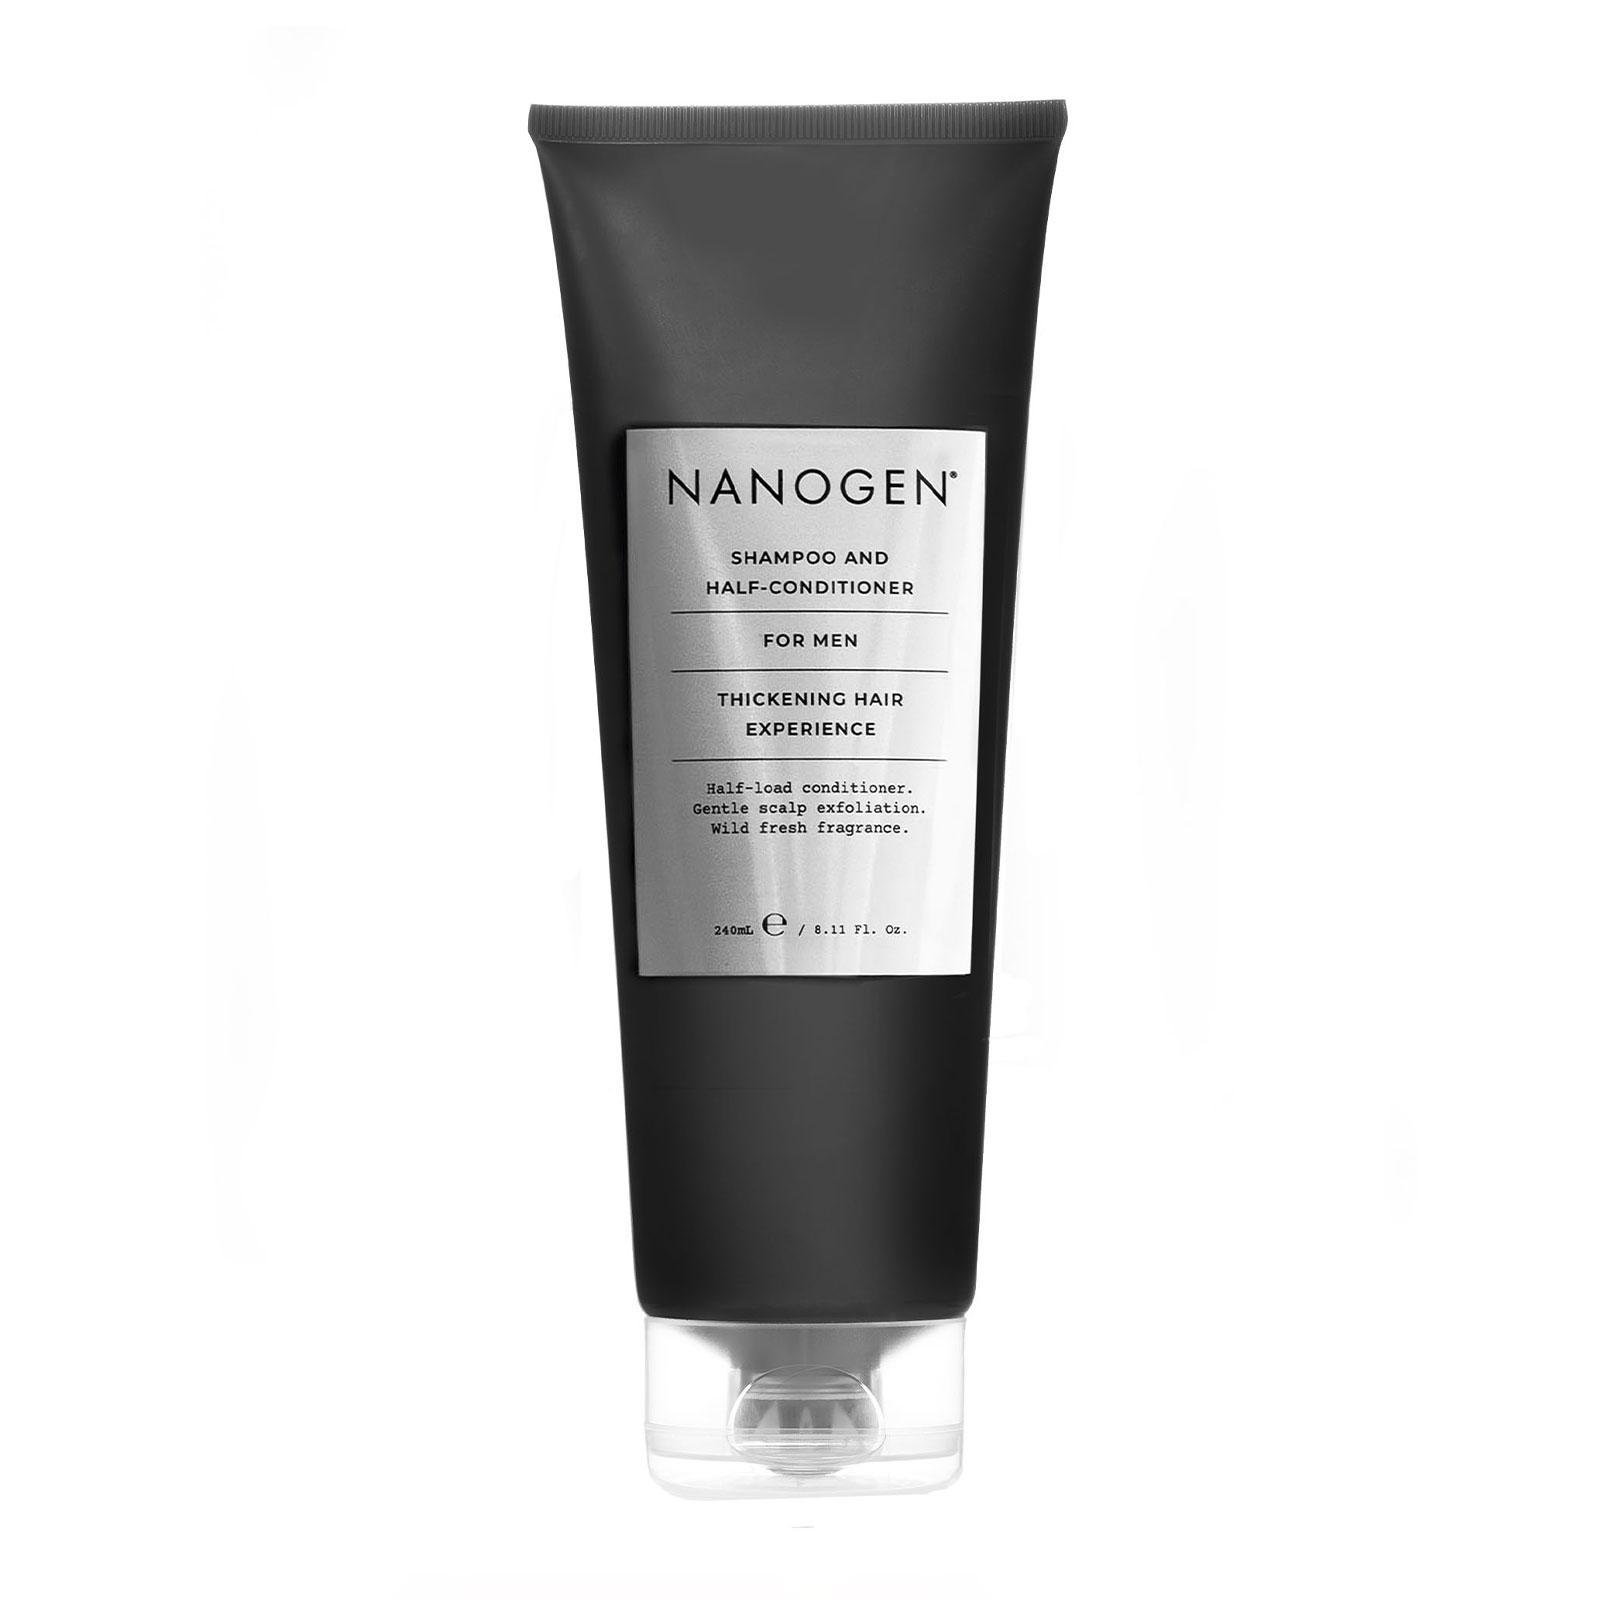 Nanogen Shampoo & Half Conditioner For Men - The Derma Company